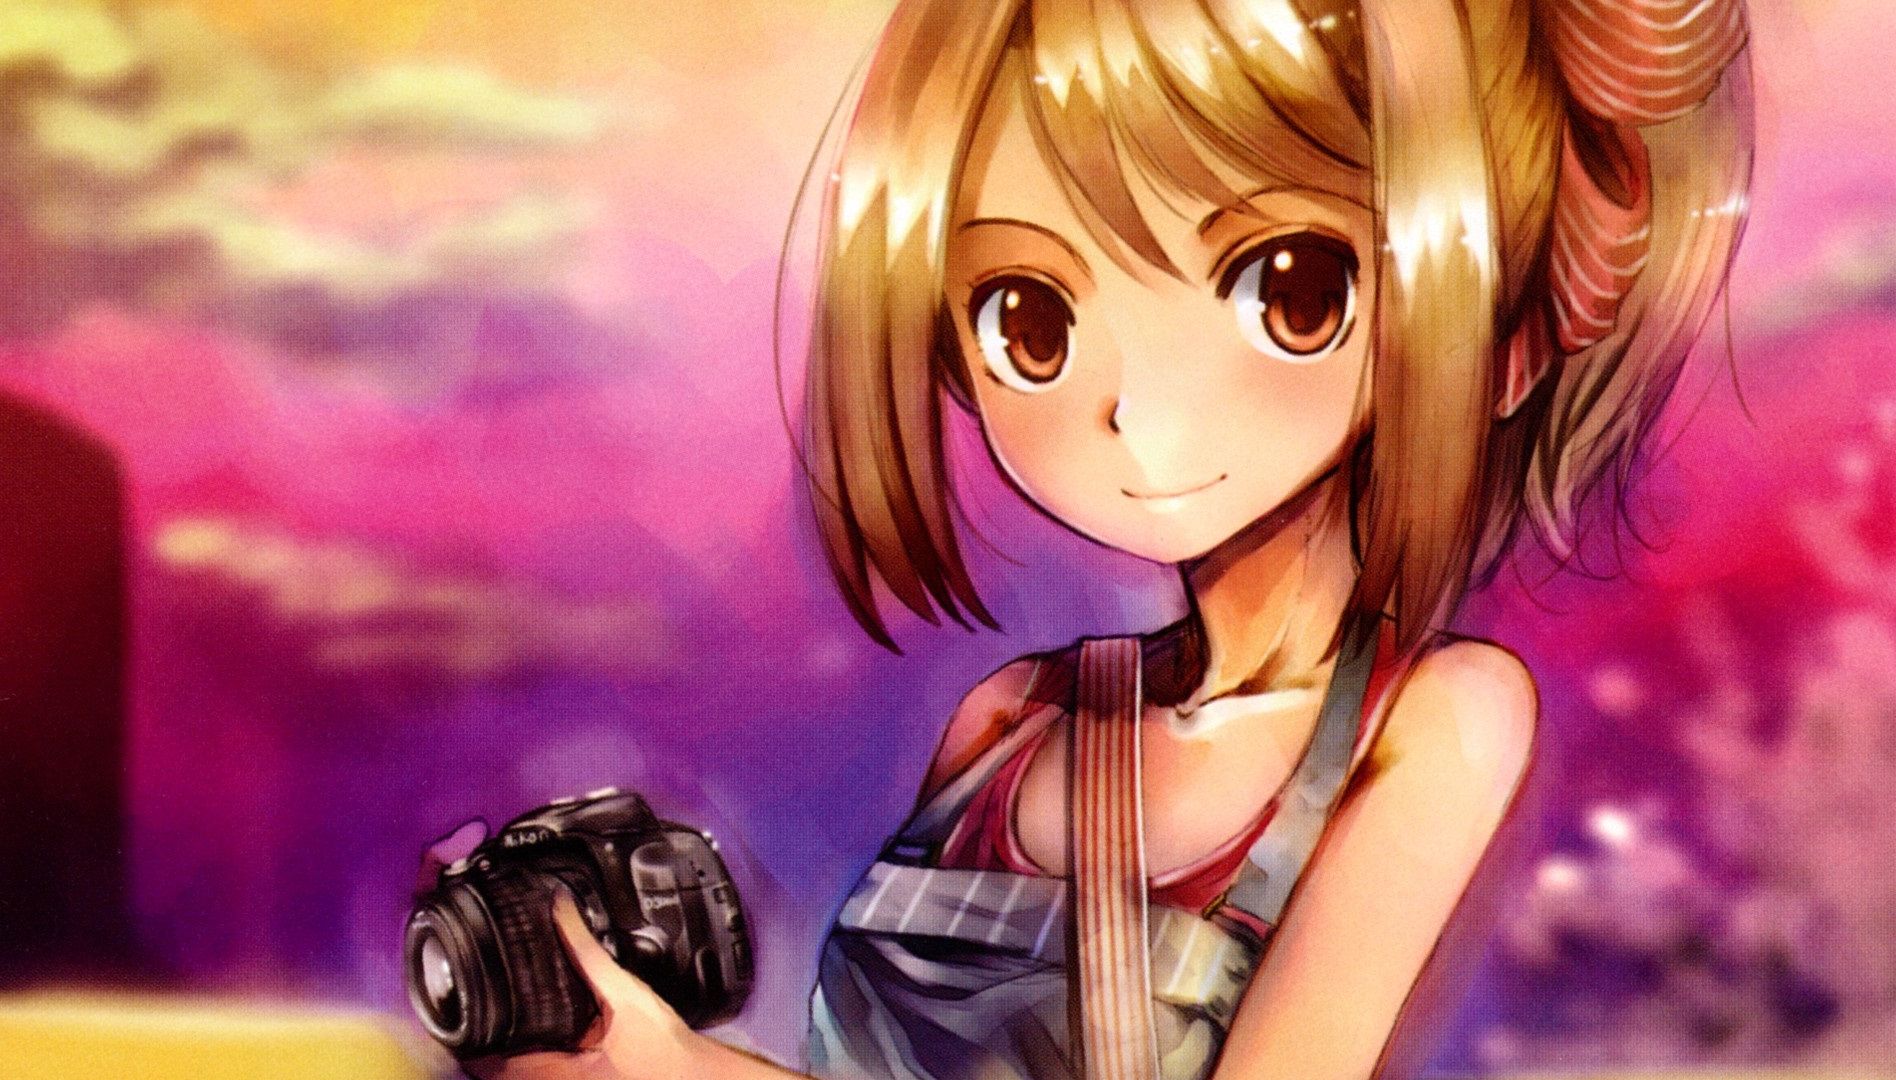 Desktop Wallpaper Photography Anime Girl Blonde Original Hd Image Picture Background 44b64d